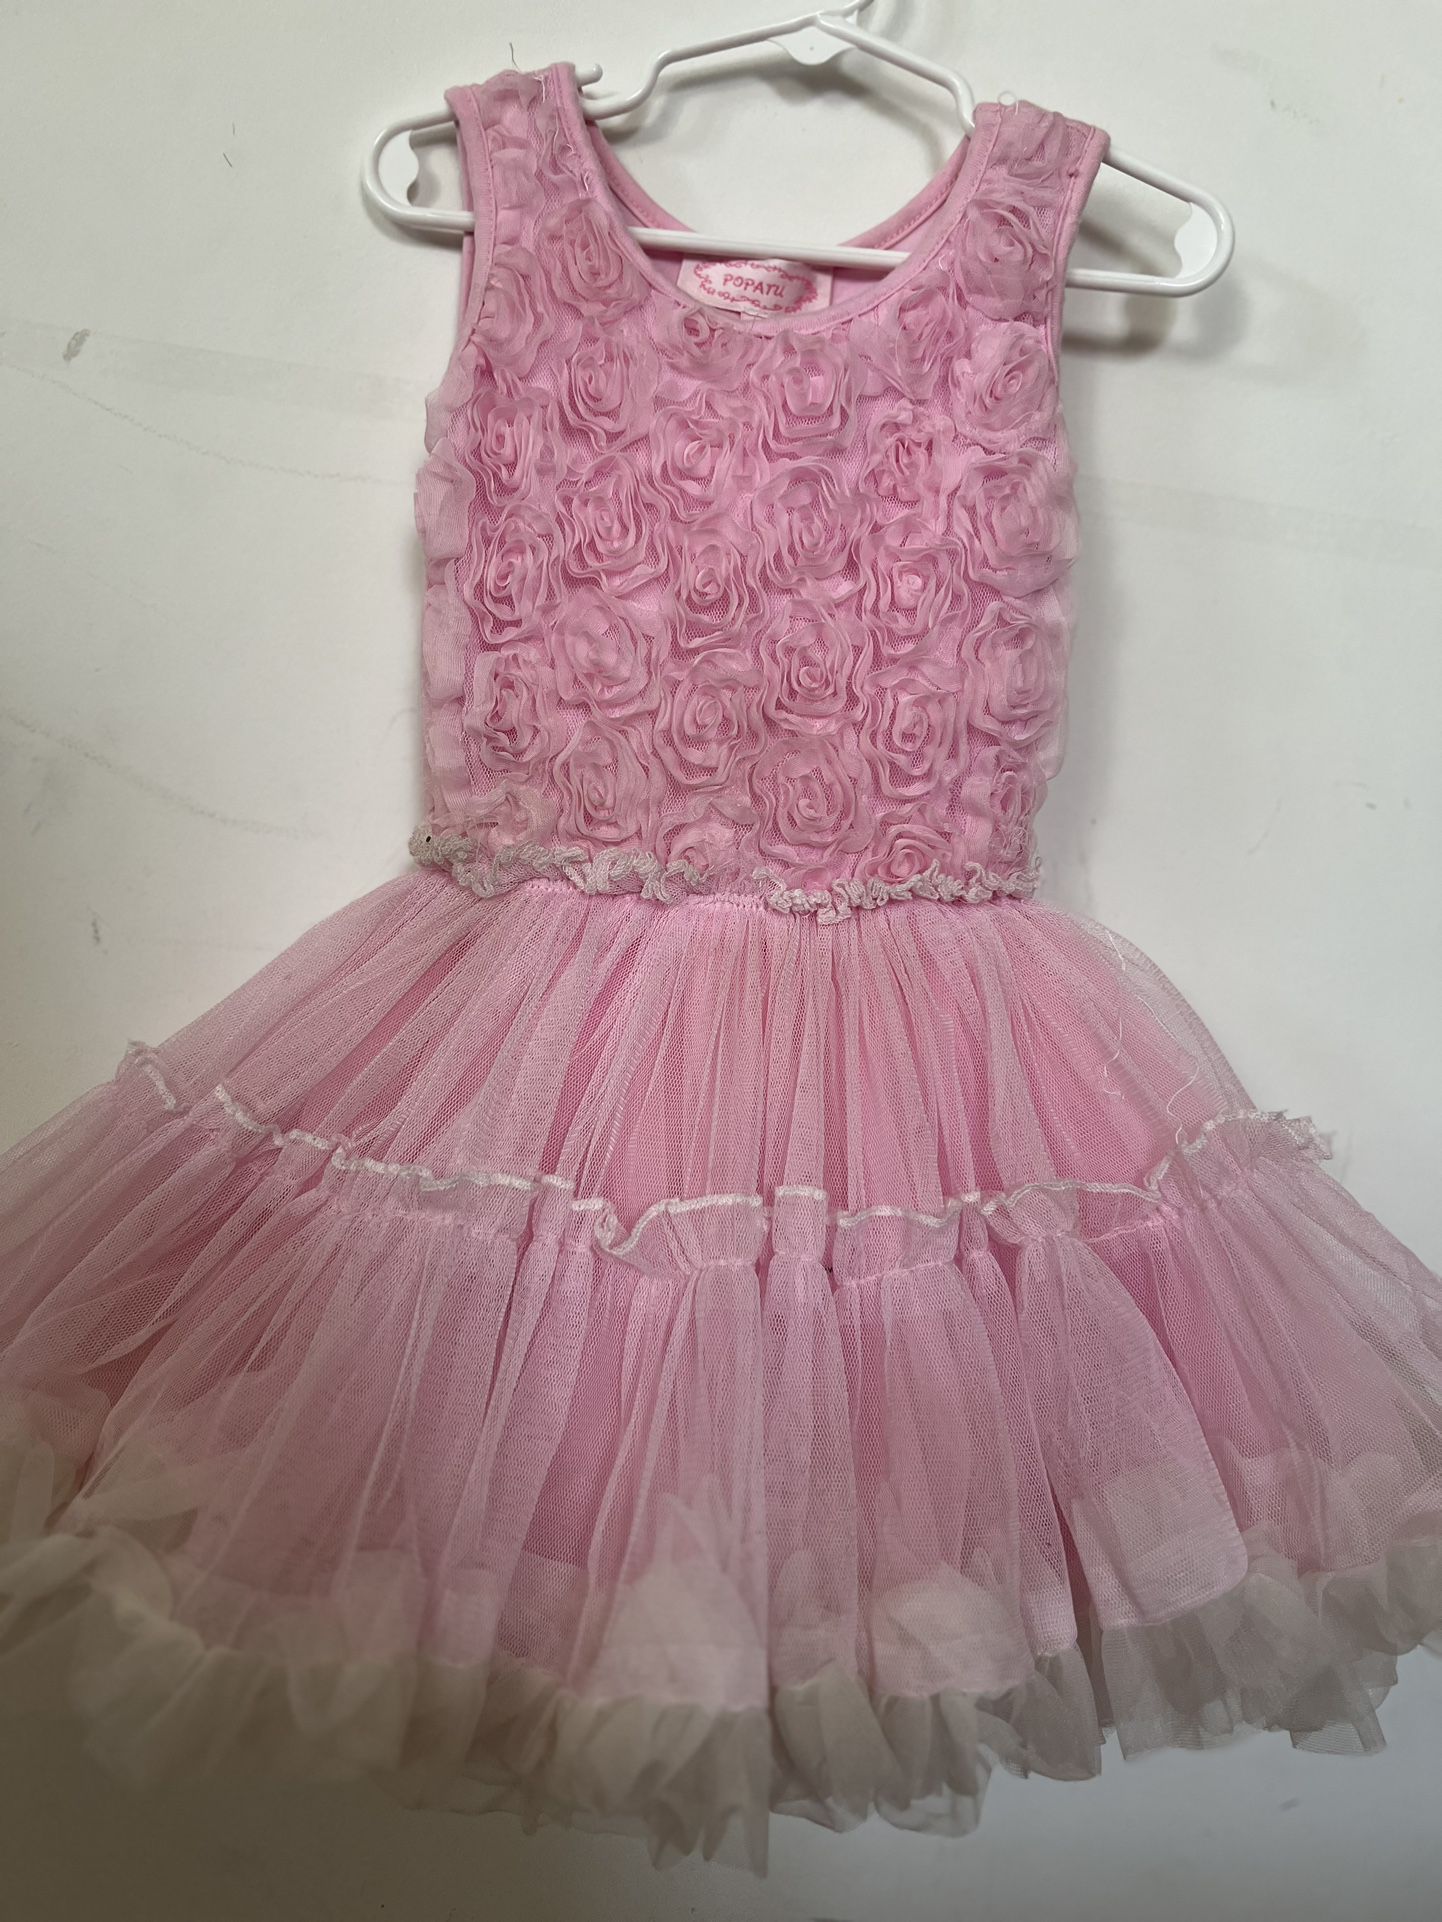 Cute Pink Tutu Dress For Girls 